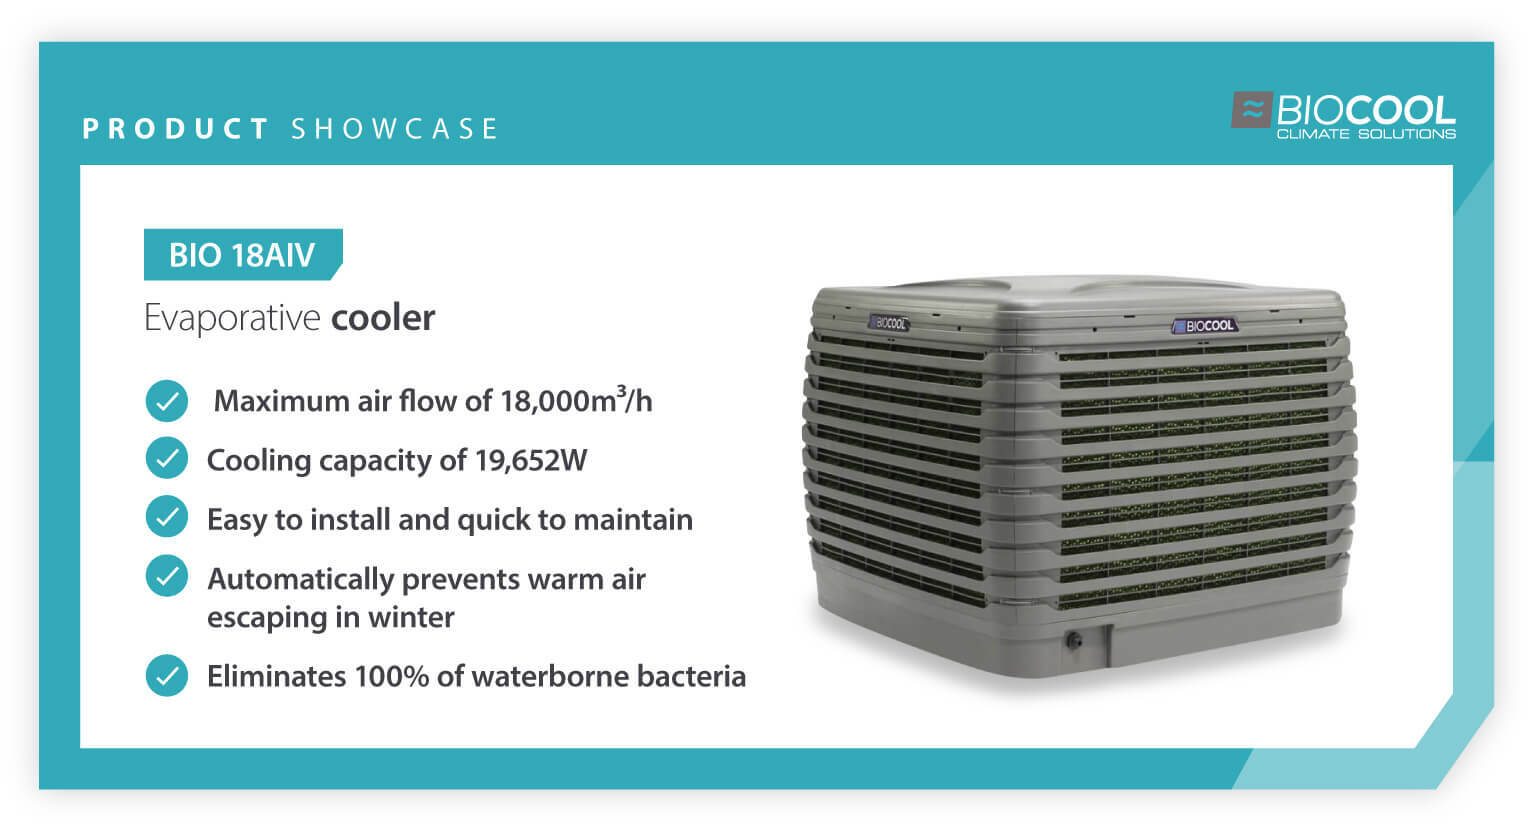 Product showcase of Biocool BIO 18AIV Evaporative cooler benefits for food production premises